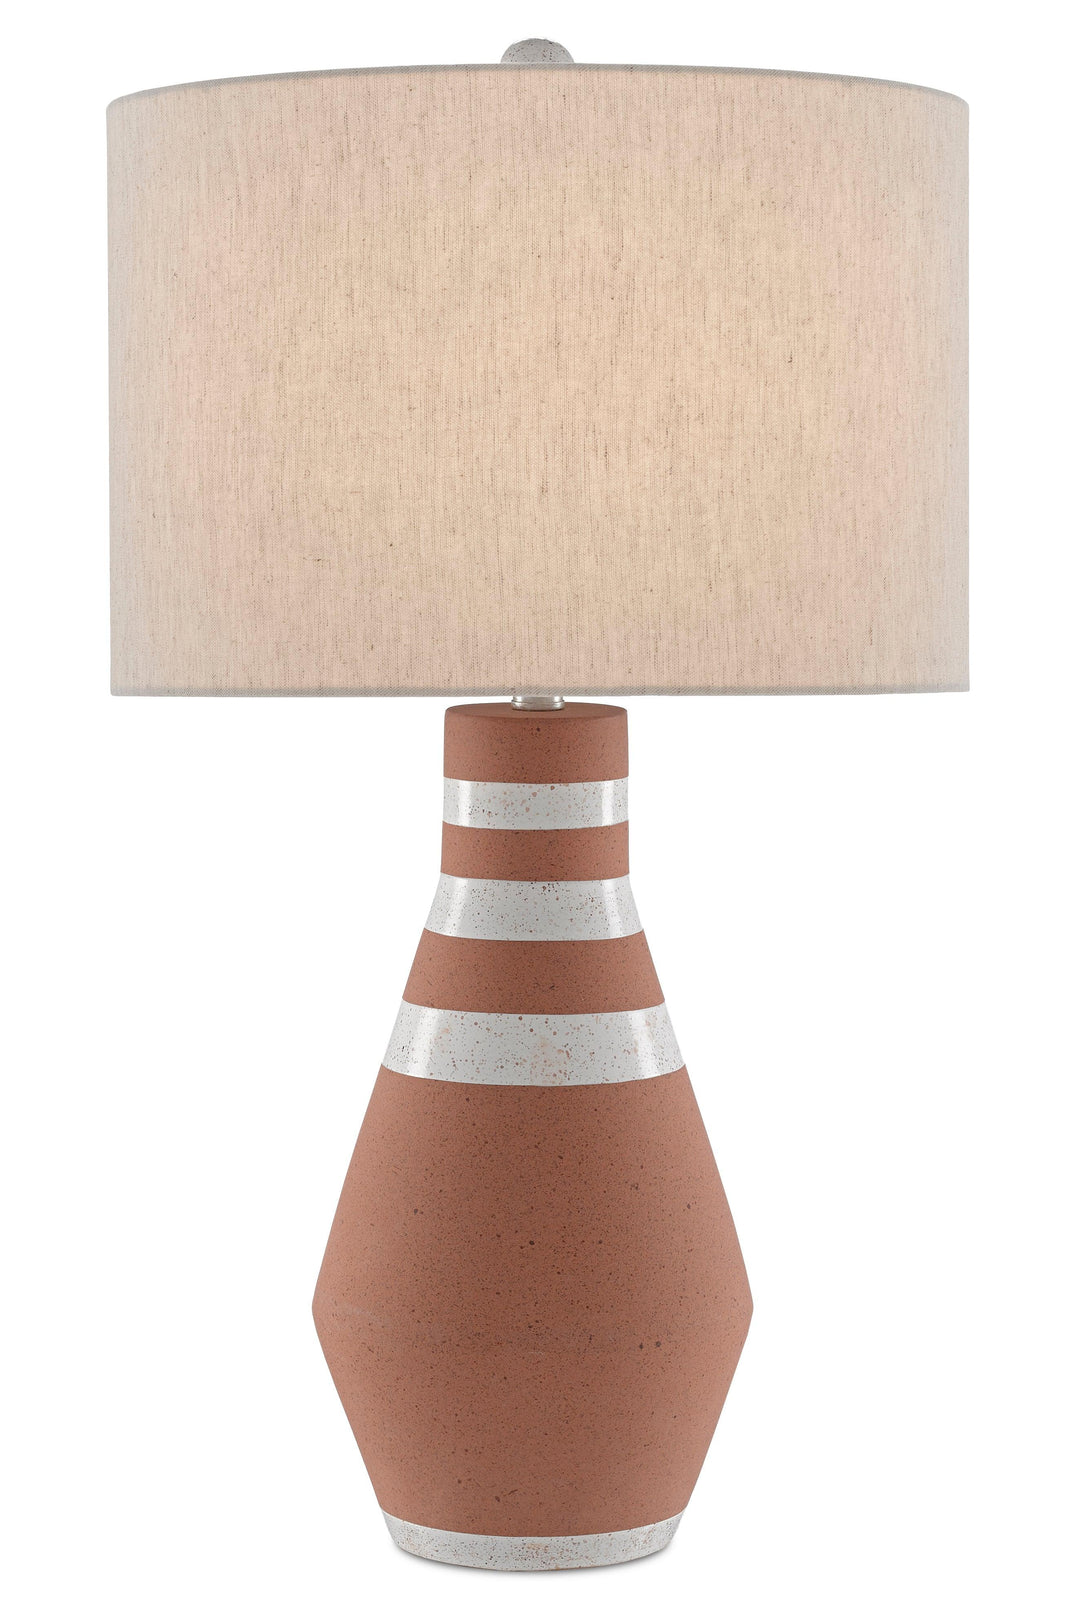 Rémont Table Lamp - Casey & Company